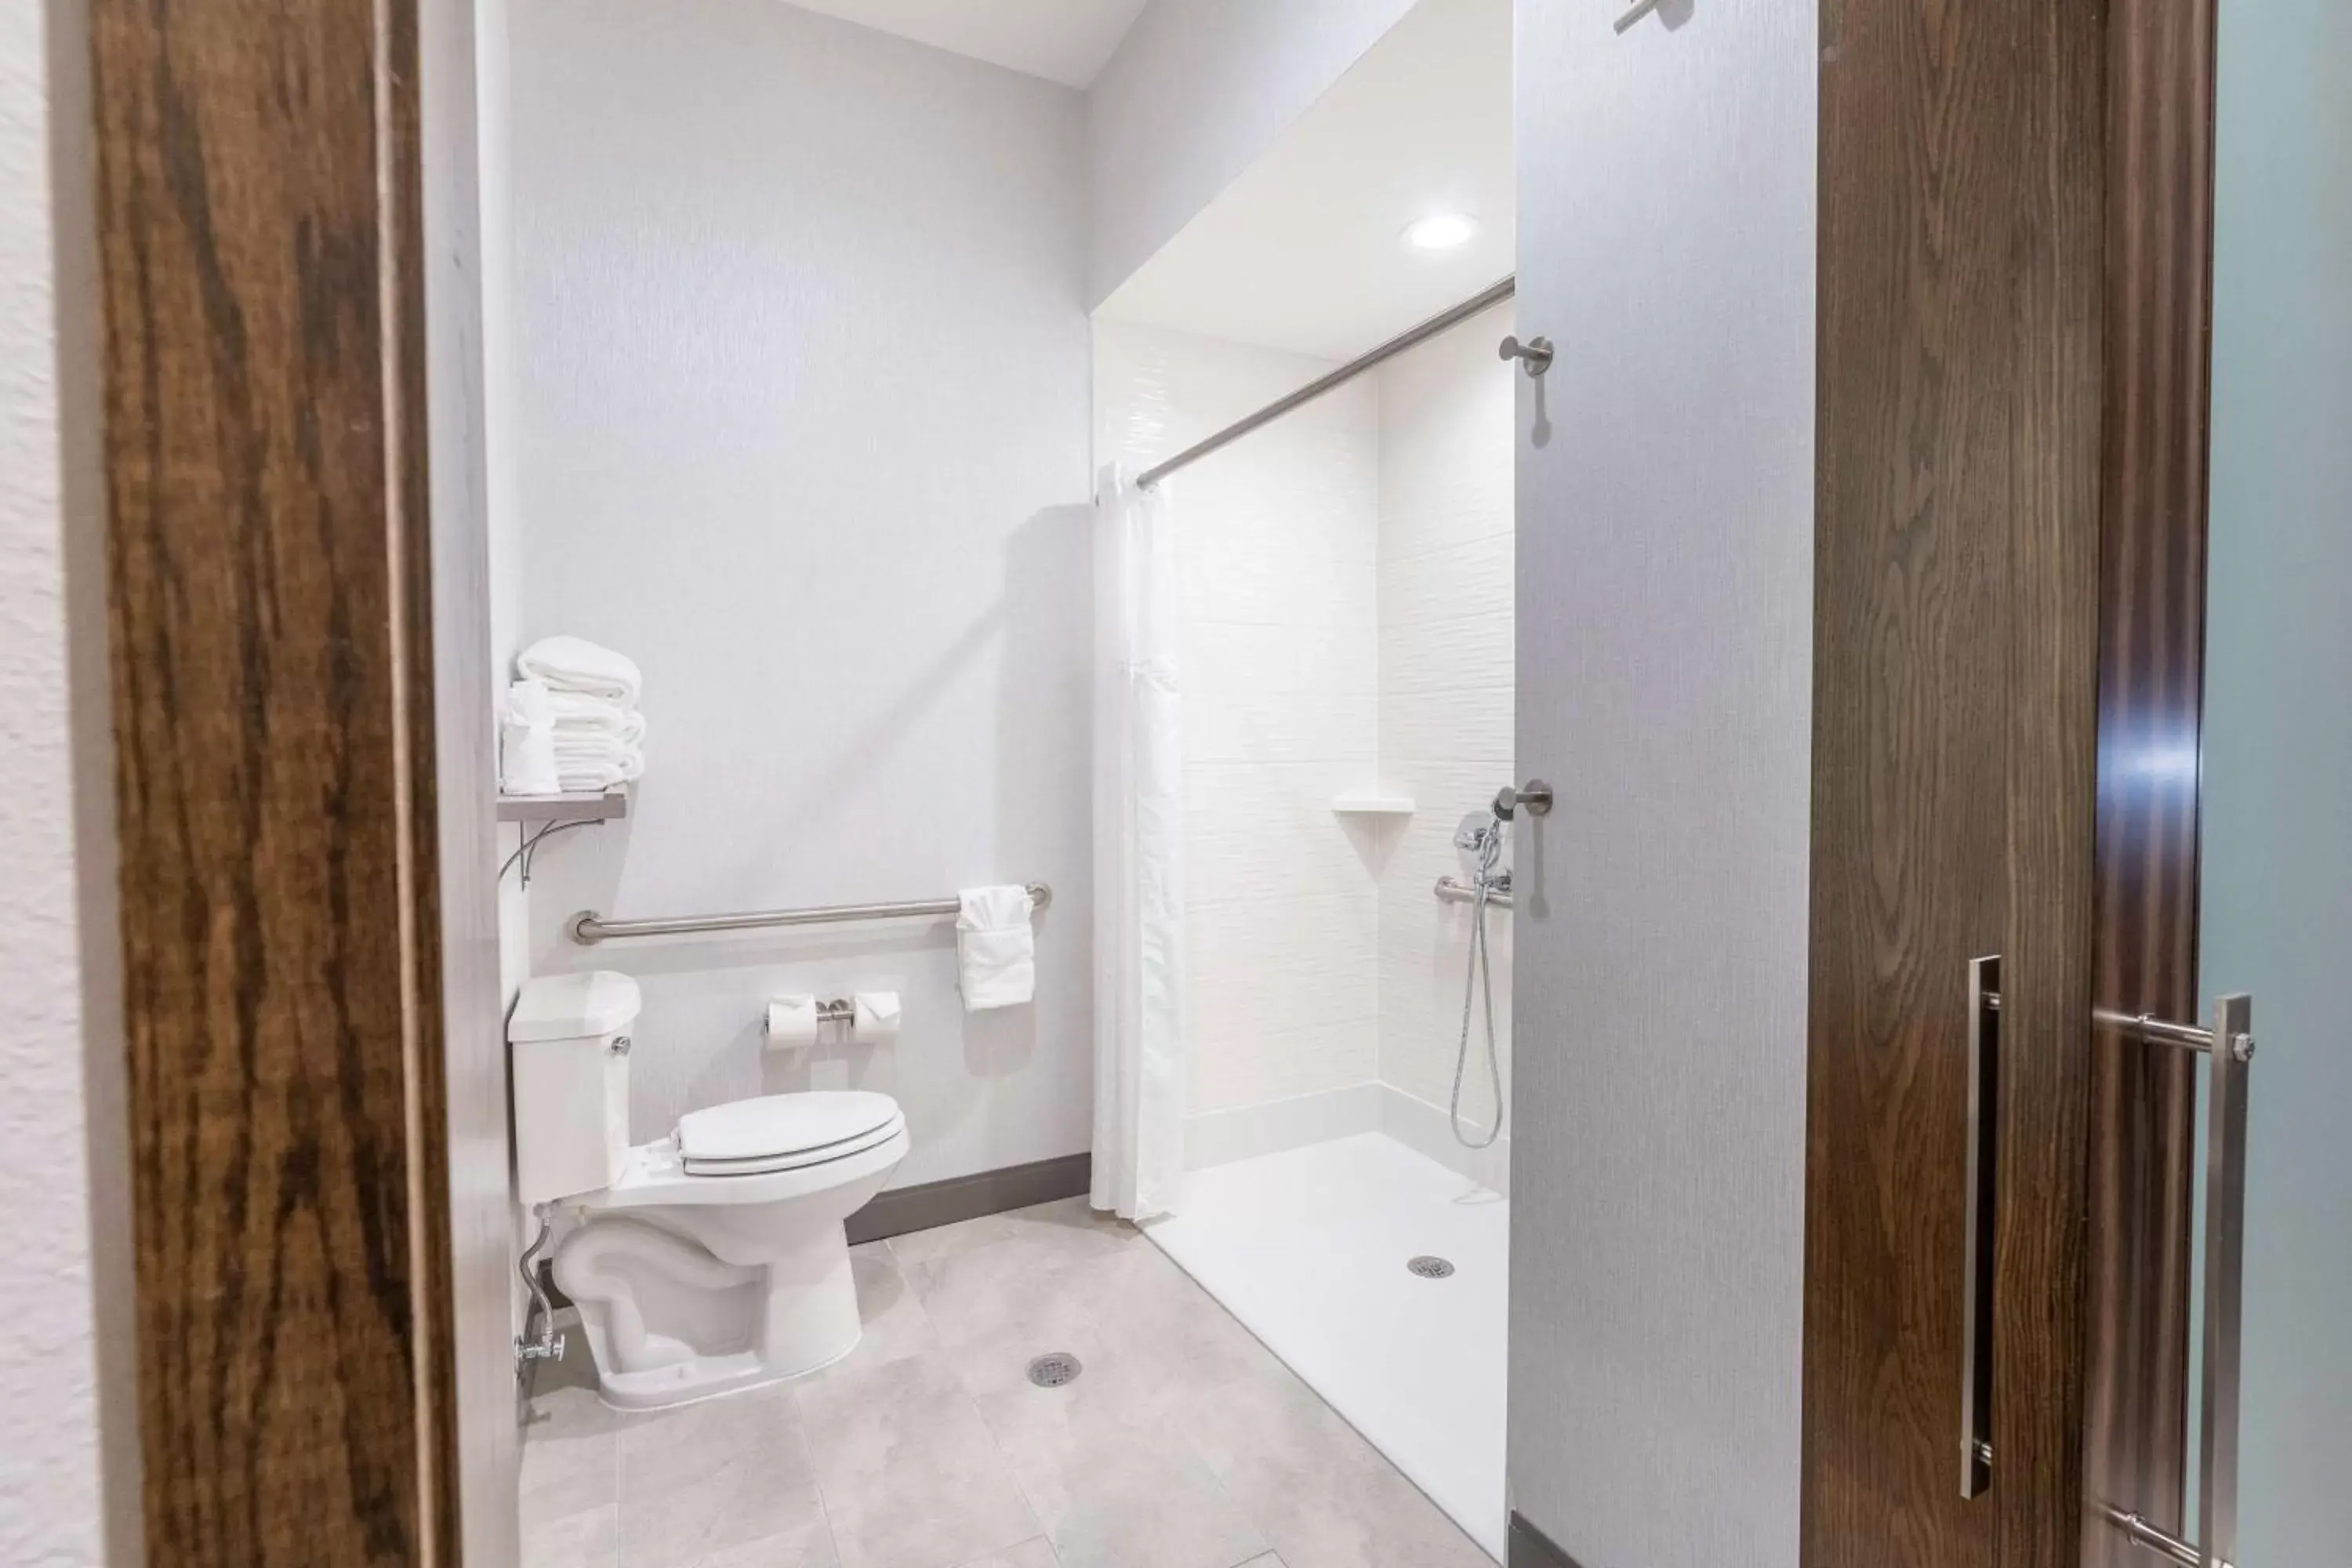 Bathroom in Hilton Garden Inn Wichita Downtown, Ks